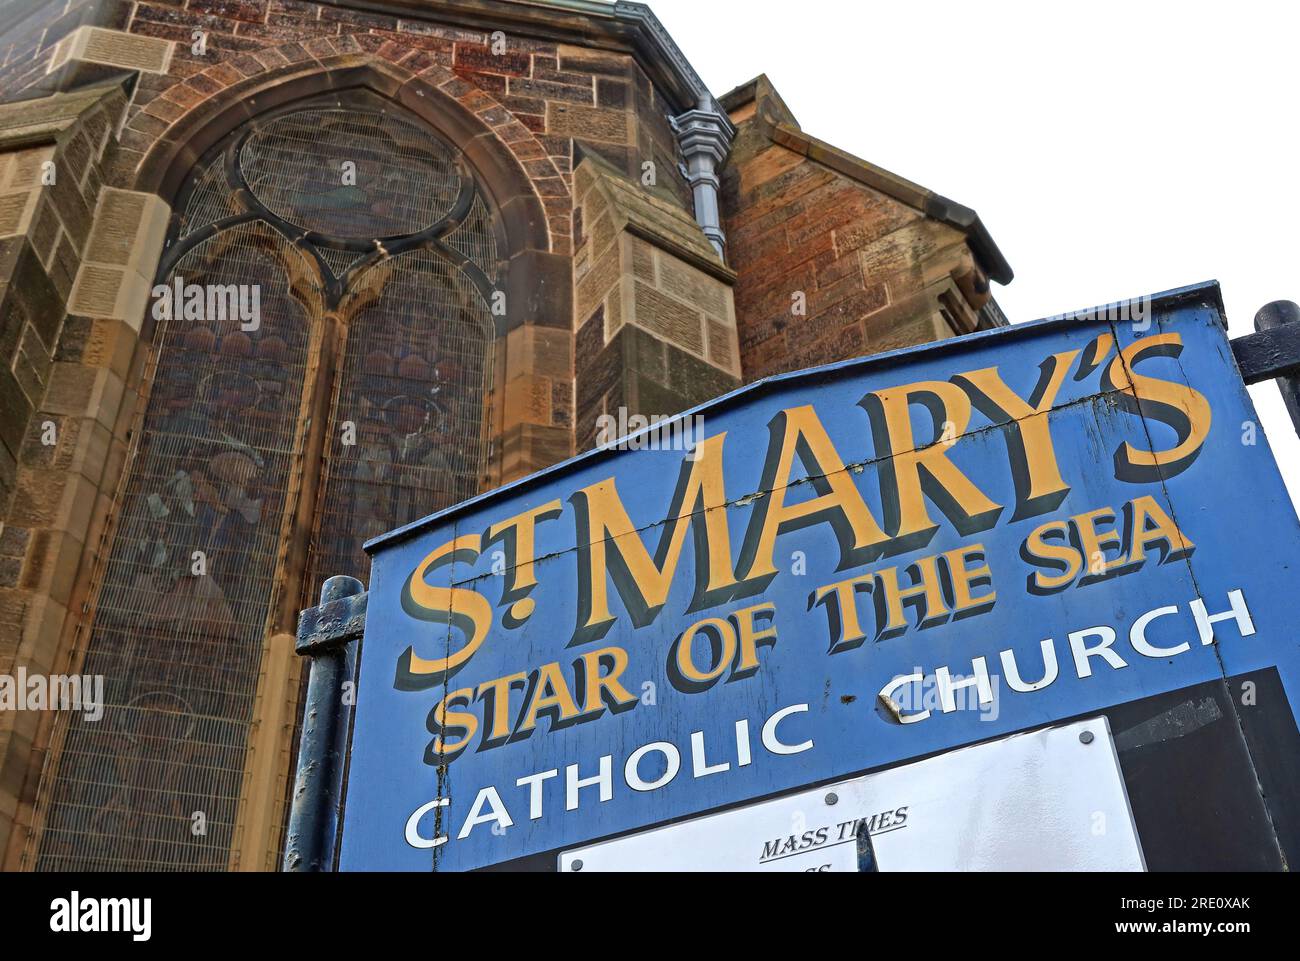 St Marys Star Of The Sea, Catholic Church, 106 Constitution Street, Leith, Edinburgh, Scotland, EH6 6AW Stock Photo